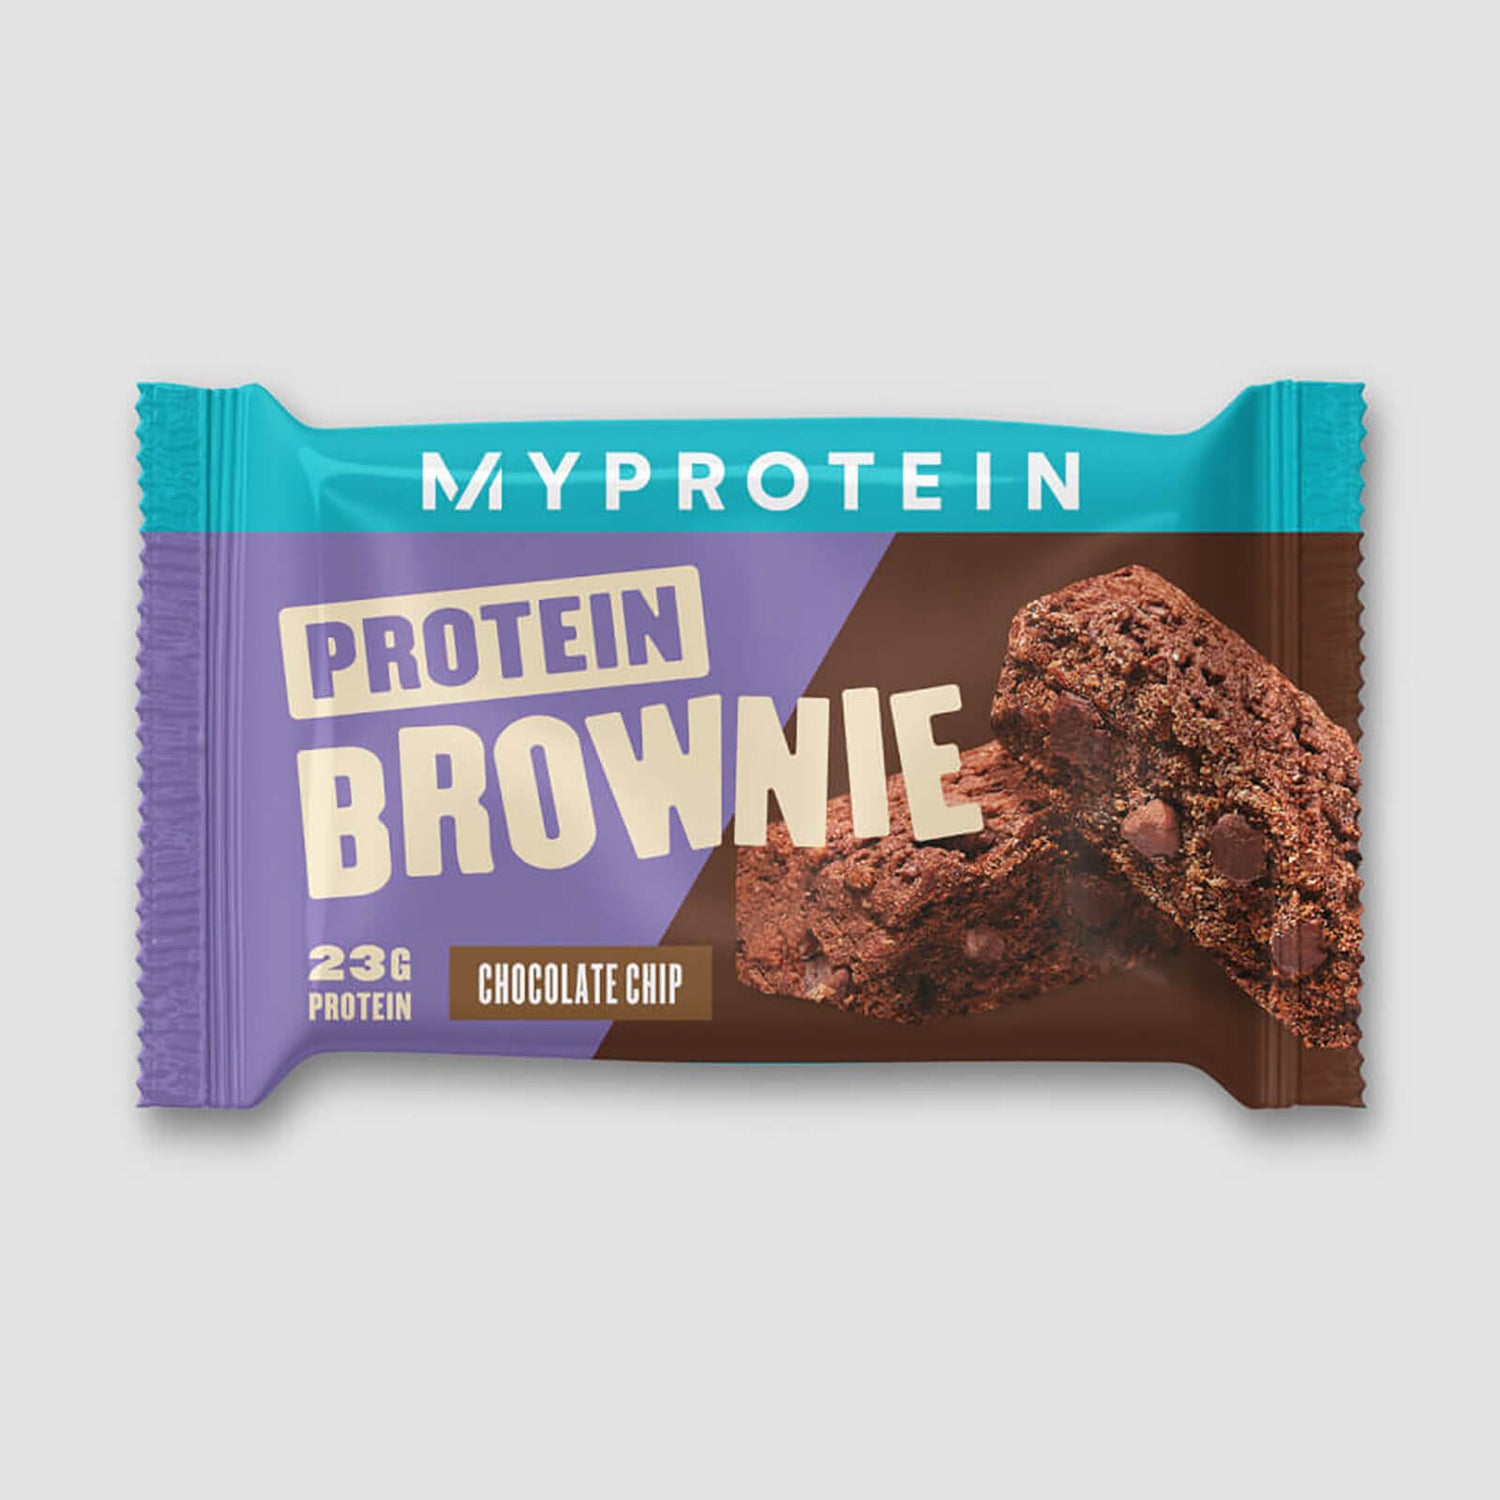 Protein Brownie - Sample - 75g - Chocolate